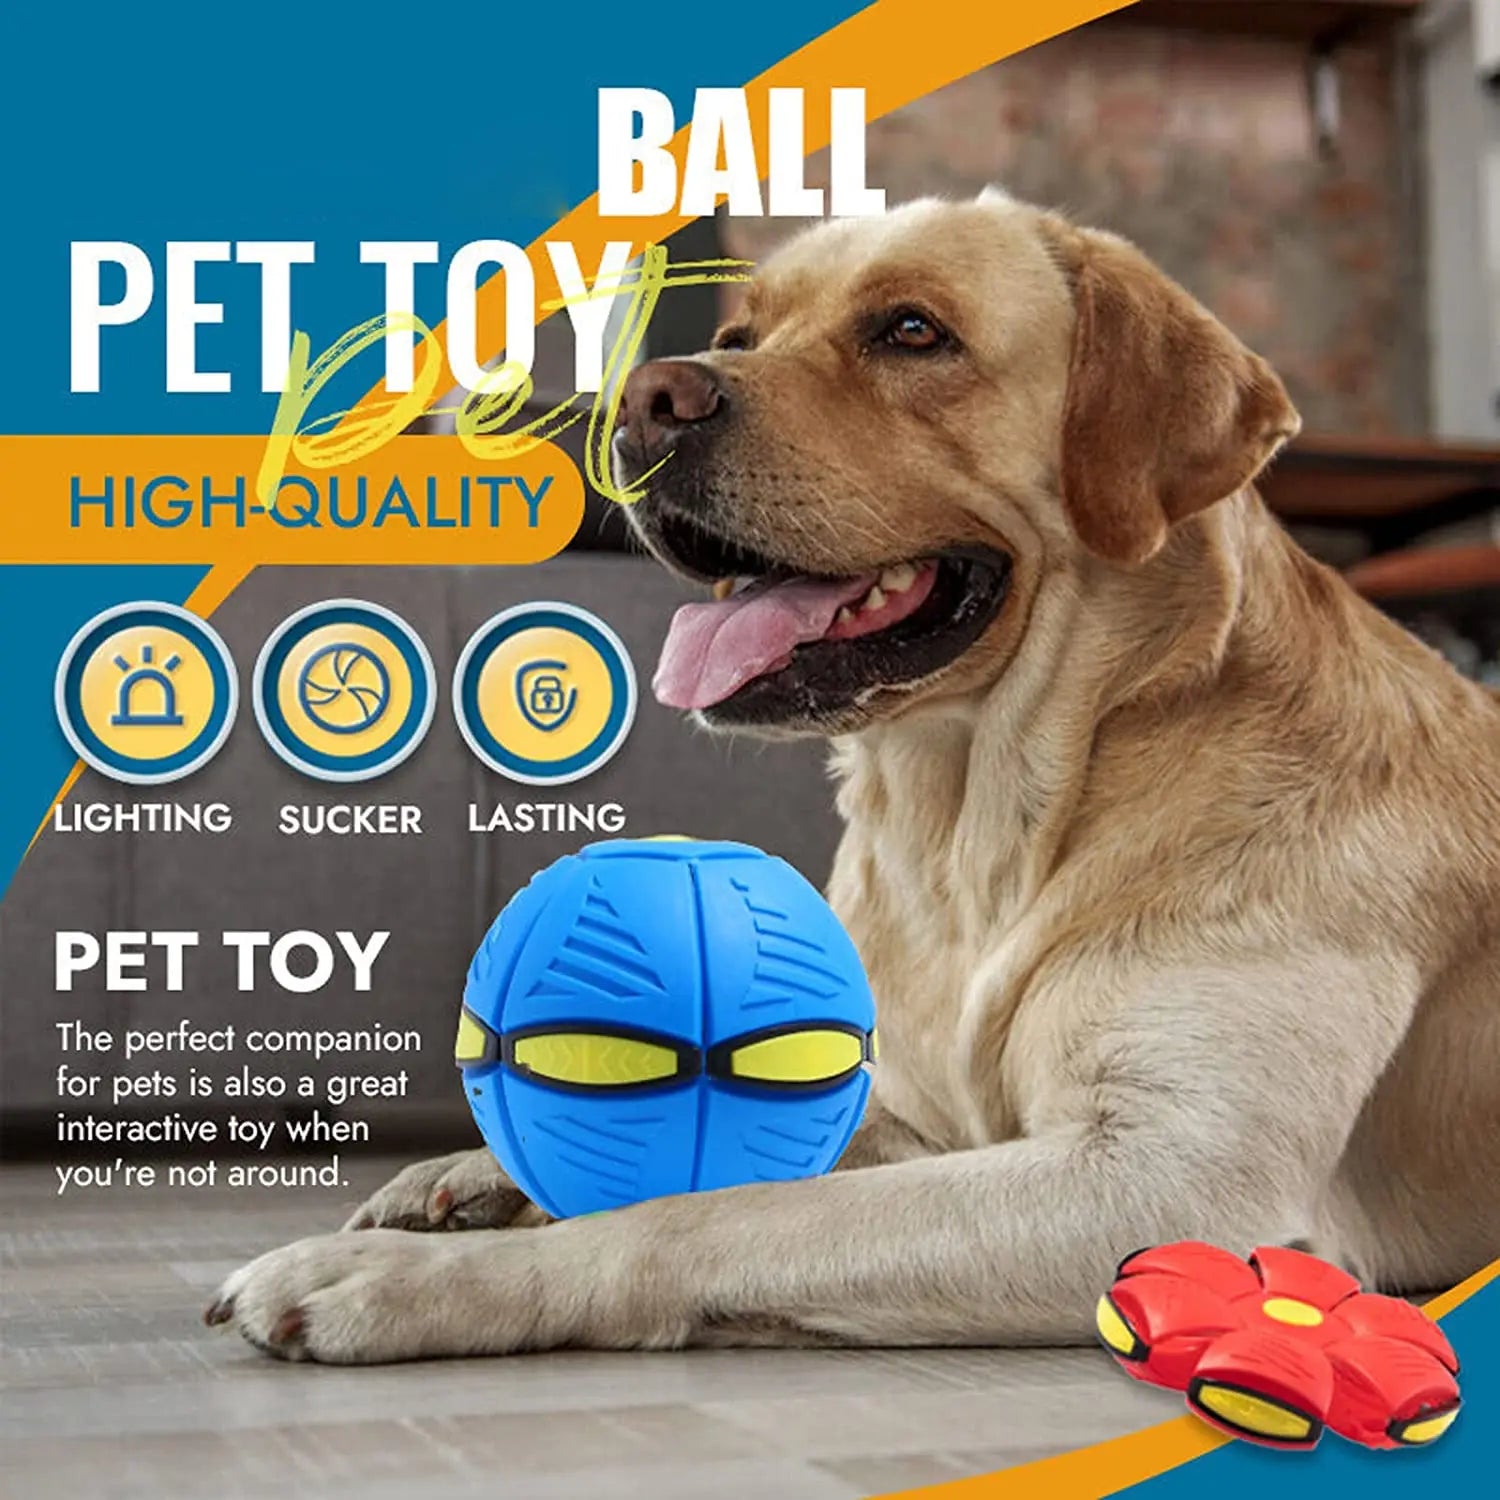 Pet Dog Toy Magic Flying Saucer Ball